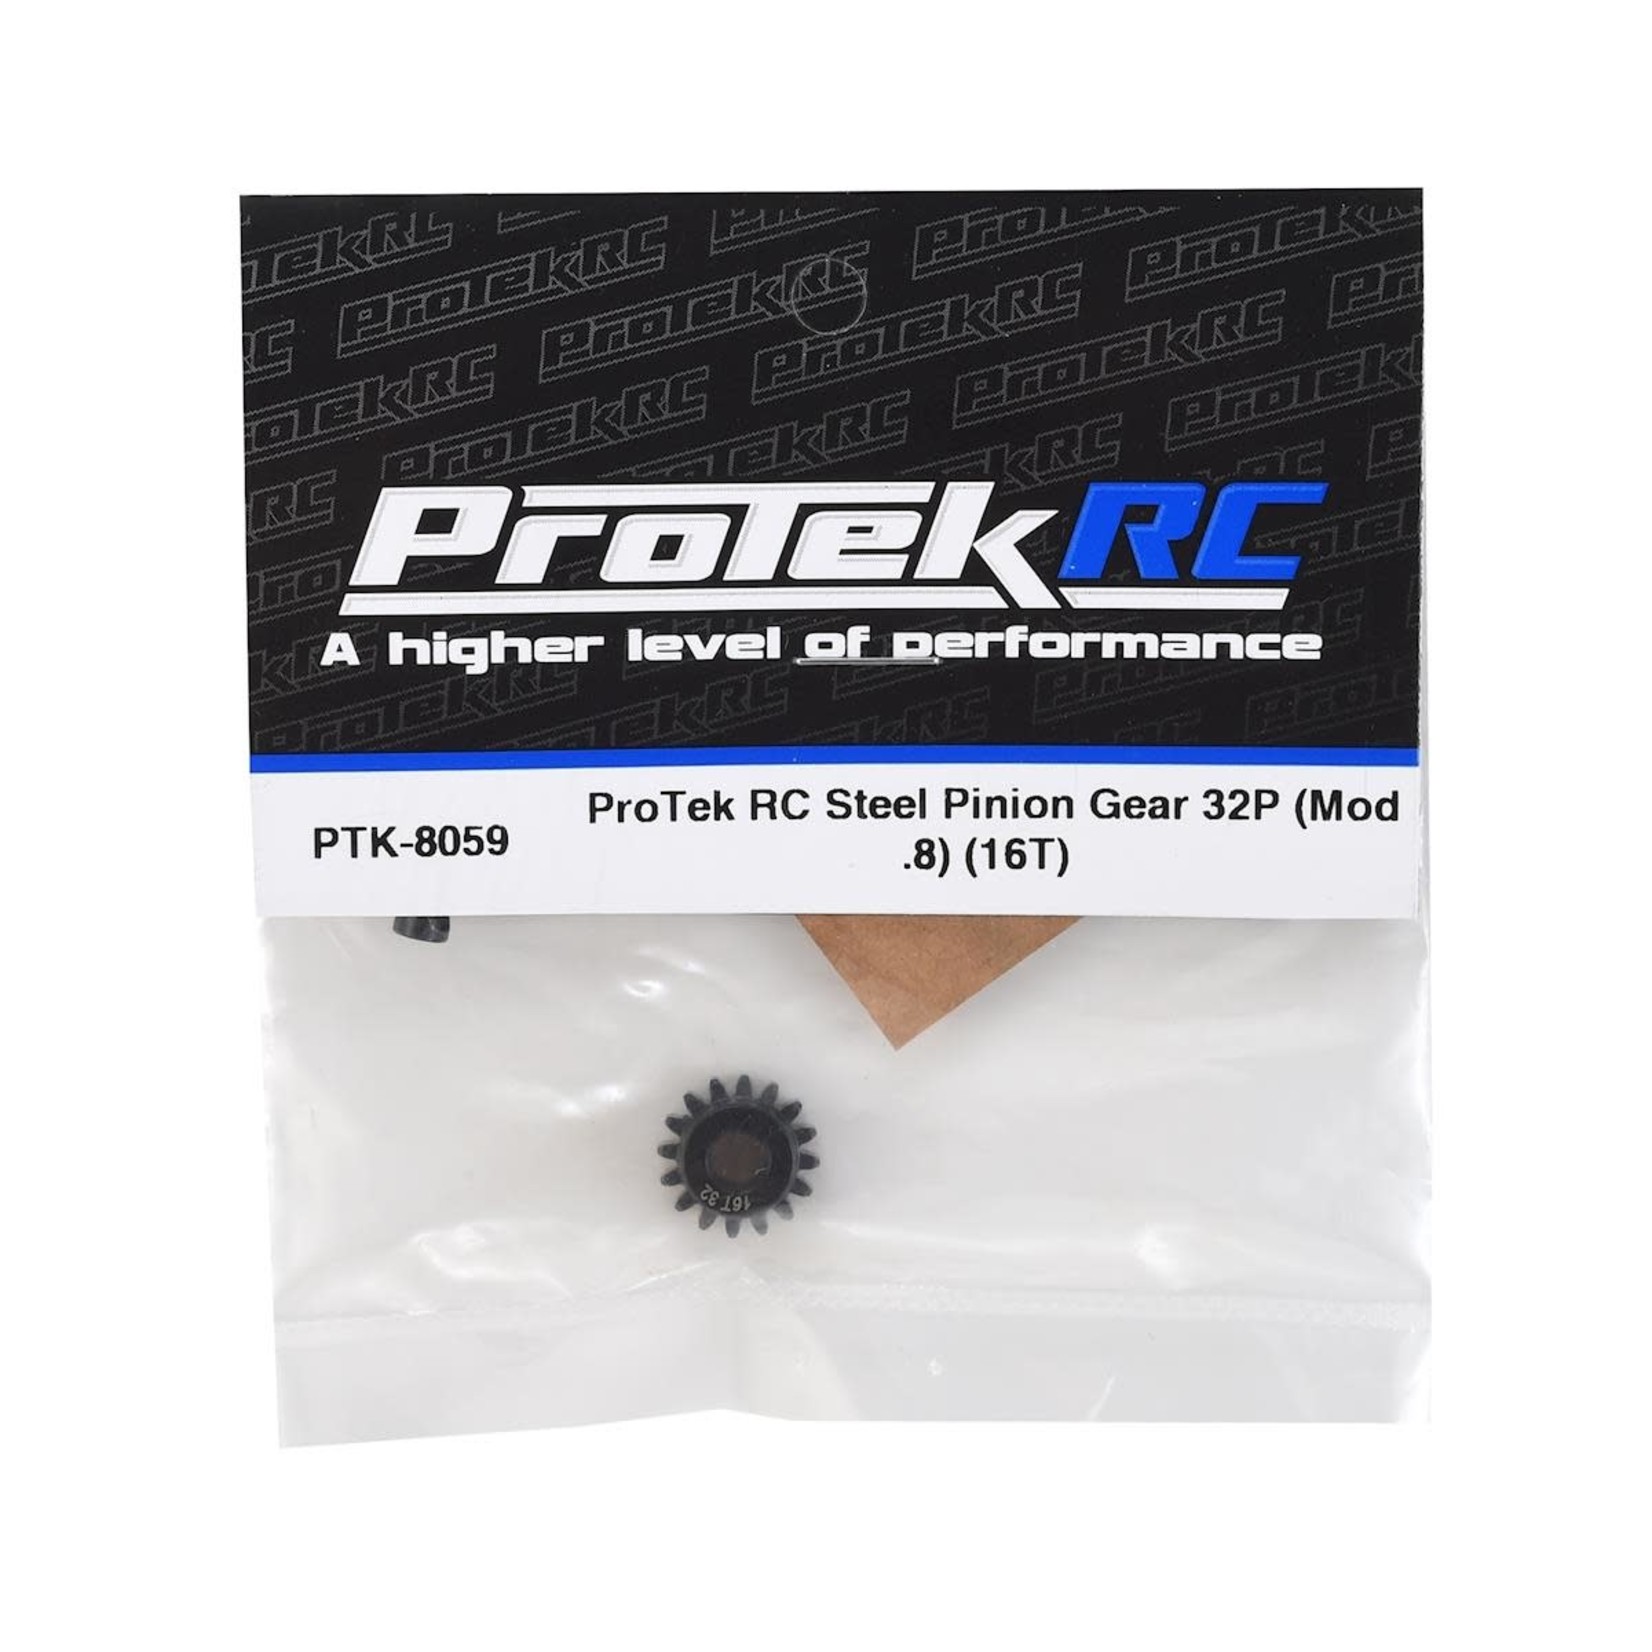 ProTek RC ProTek RC Steel 32P Pinion Gear w/3.17mm Reducer Sleeve (Mod .8) (5mm Bore) (16T) #PTK-8059